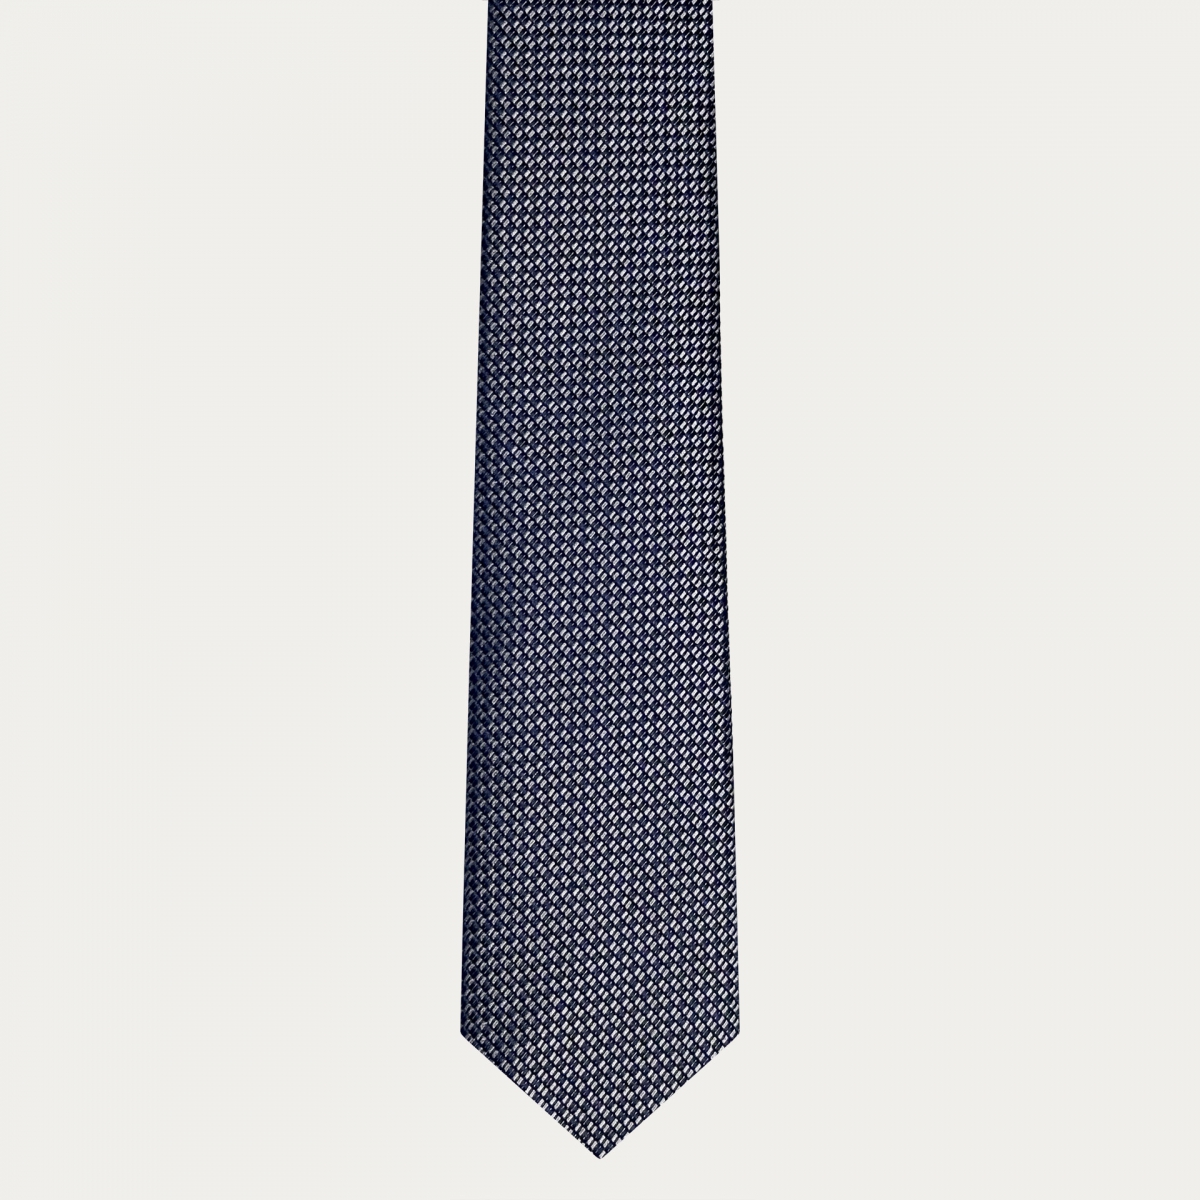 Cravatta uomo in seta jacquard argento e navy